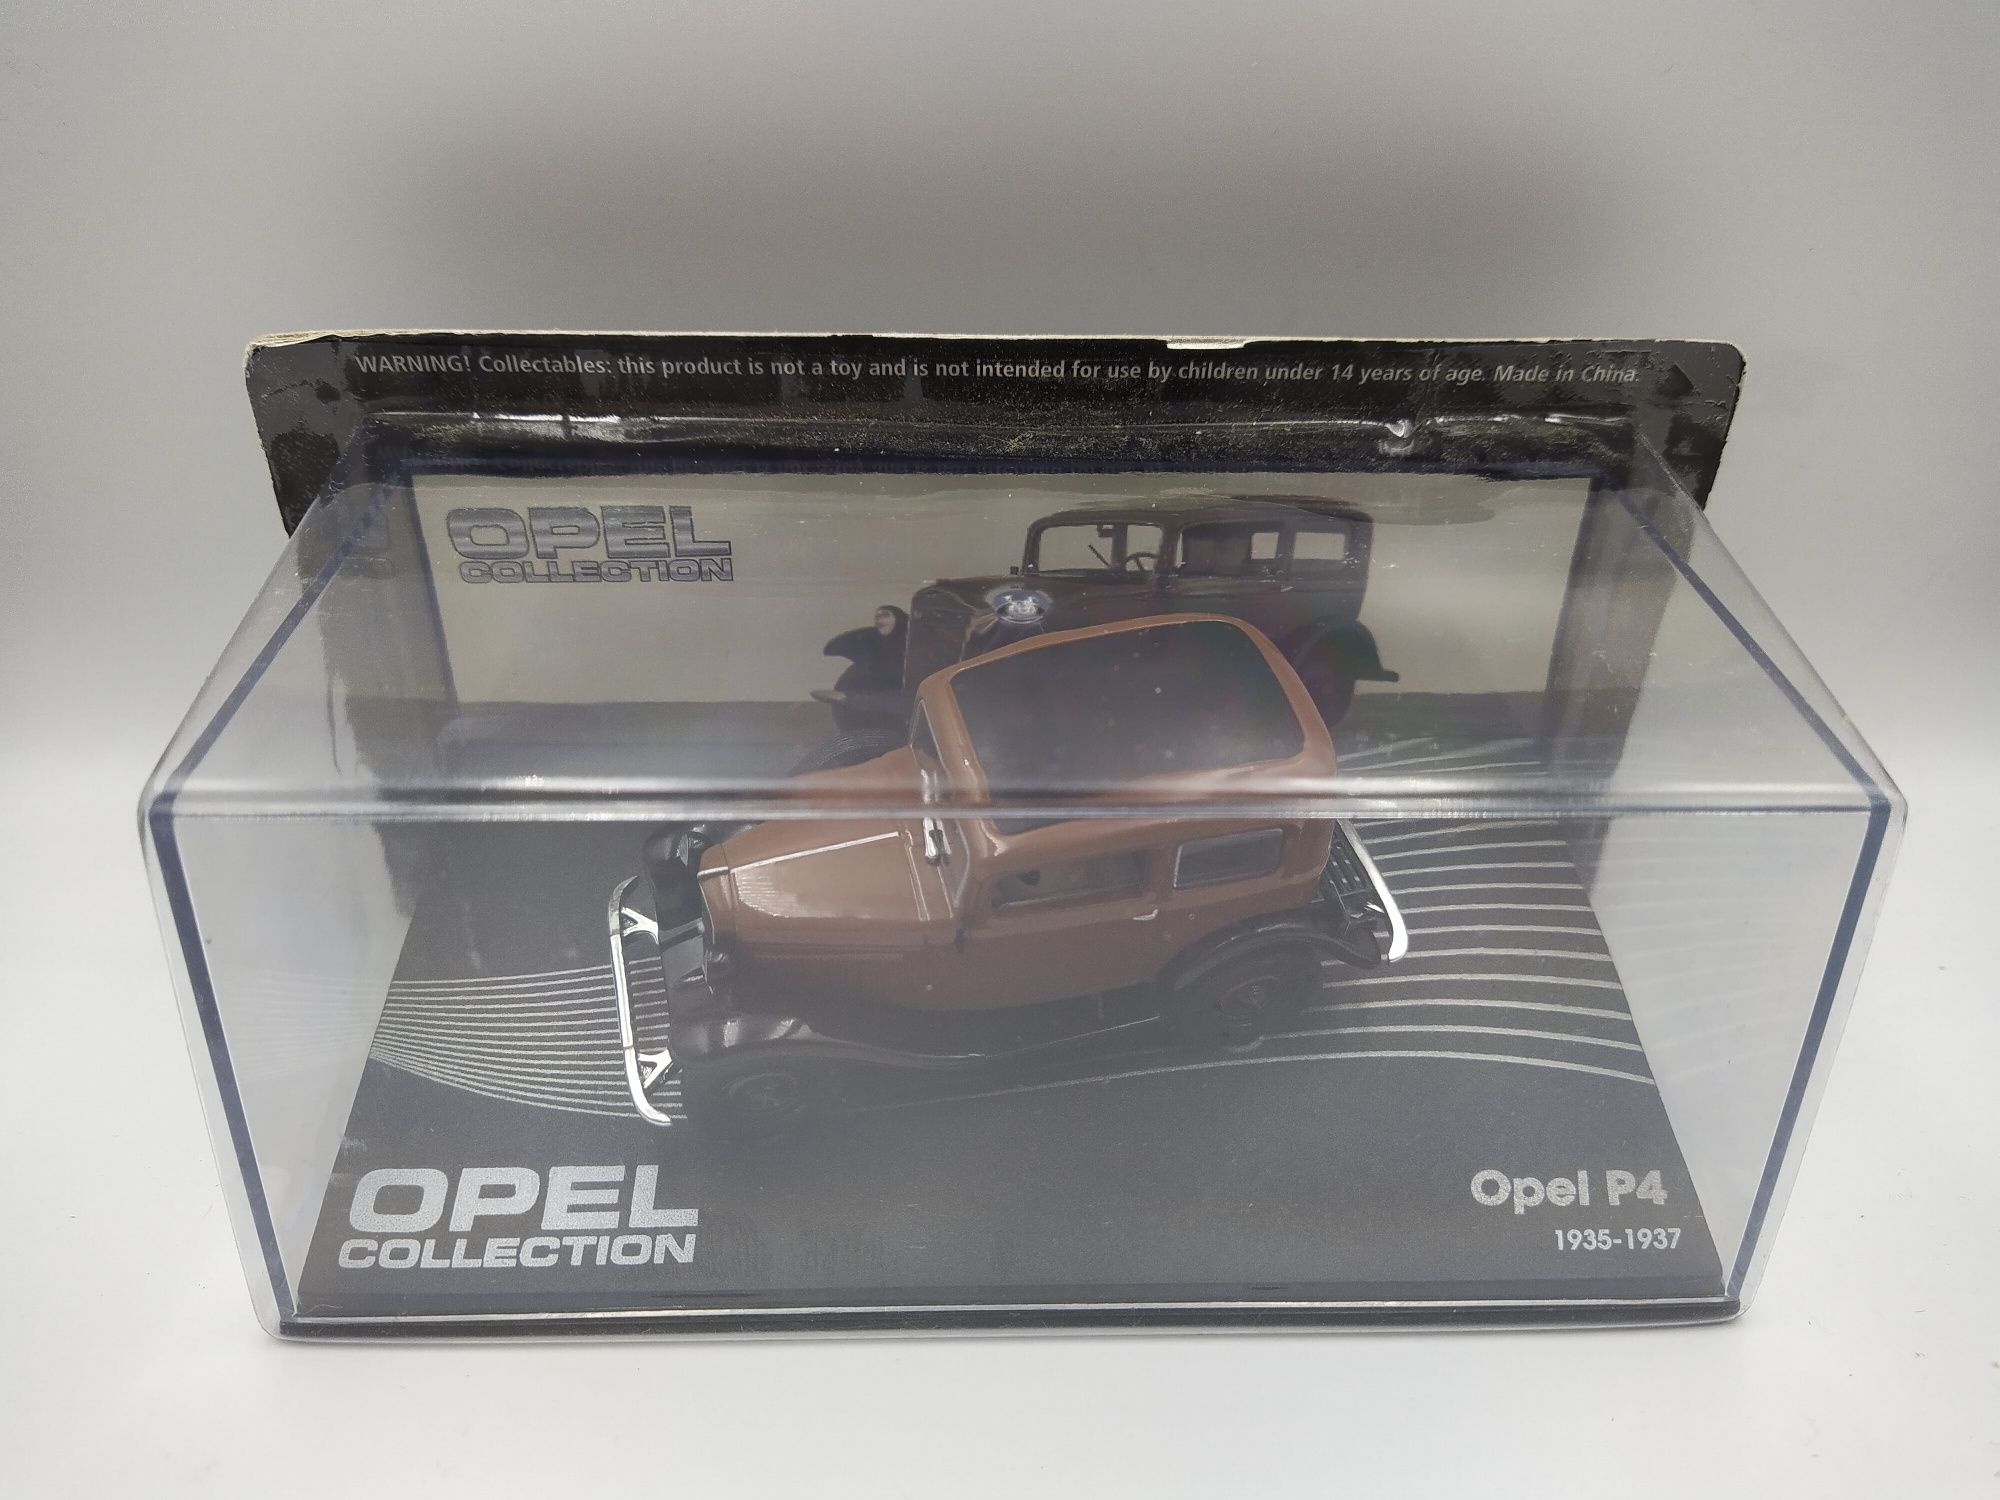 Opel P4 opel collection Eaglemoss Altaya Skala 1:43